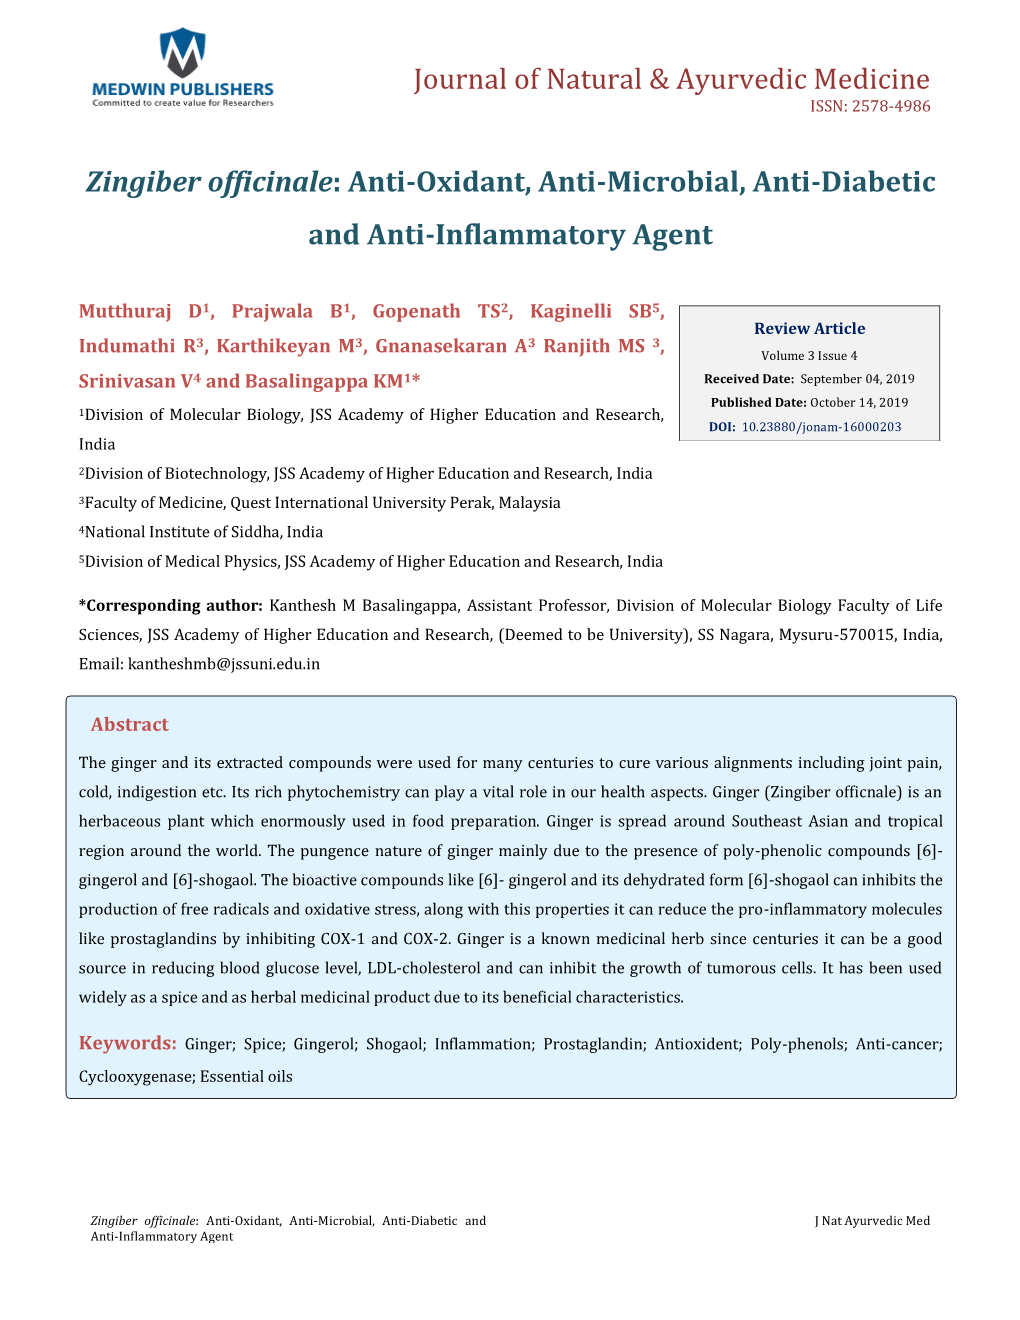 Zingiber Officinale: Anti-Oxidant, Anti-Microbial, Anti-Diabetic and Anti-Inflammatory Agent